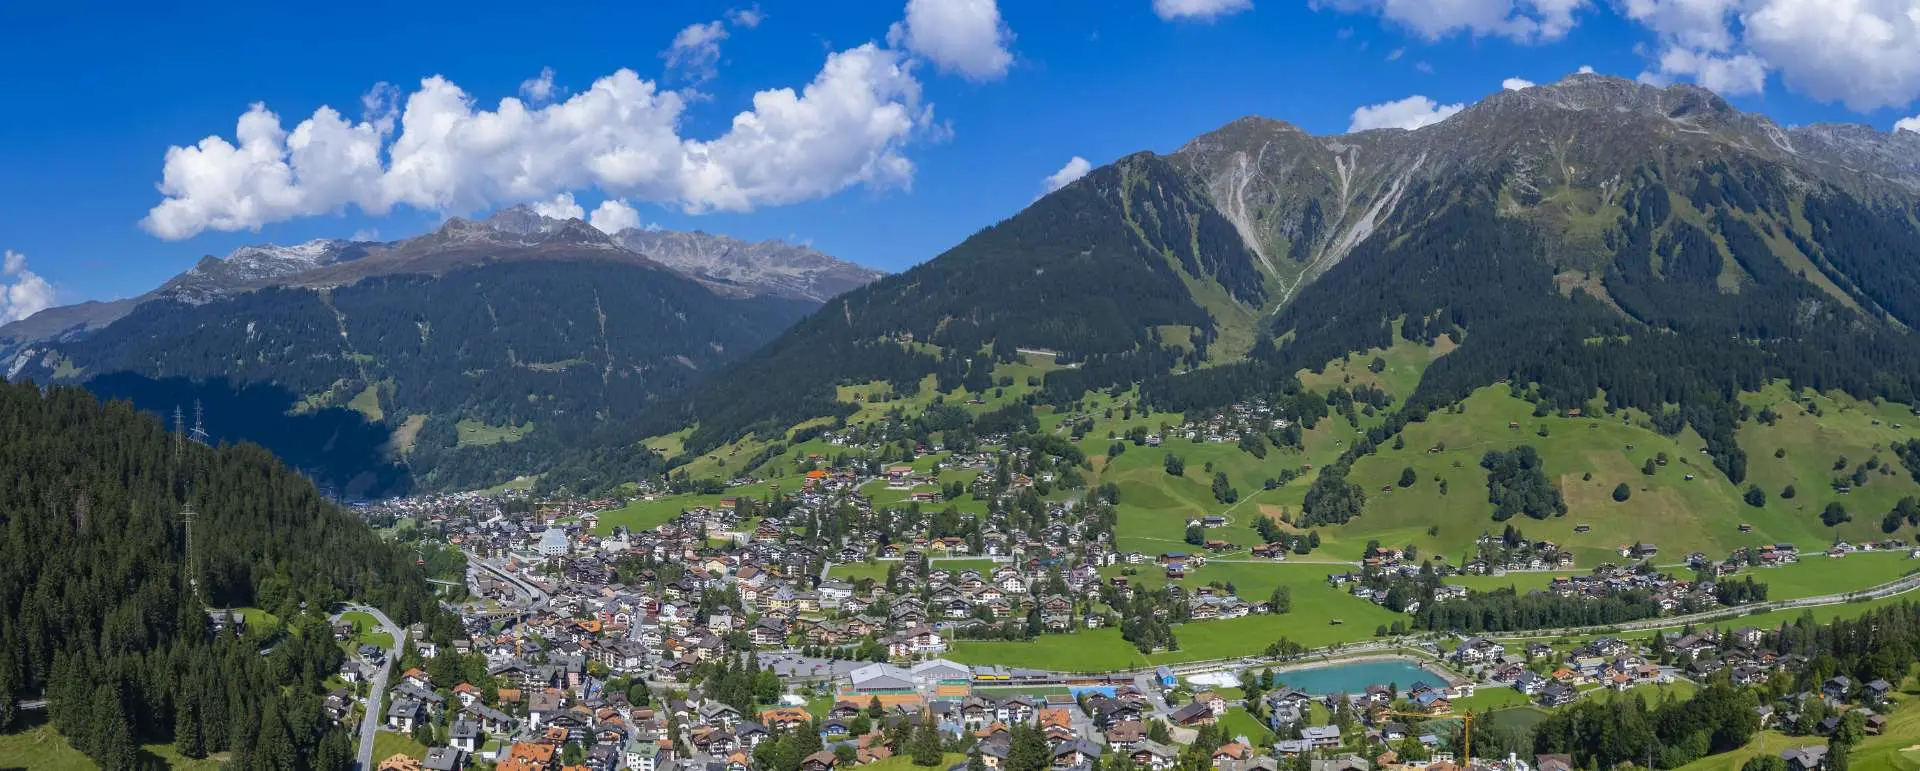 Klosters-Serneus - the destination for pilgrimage accomodations